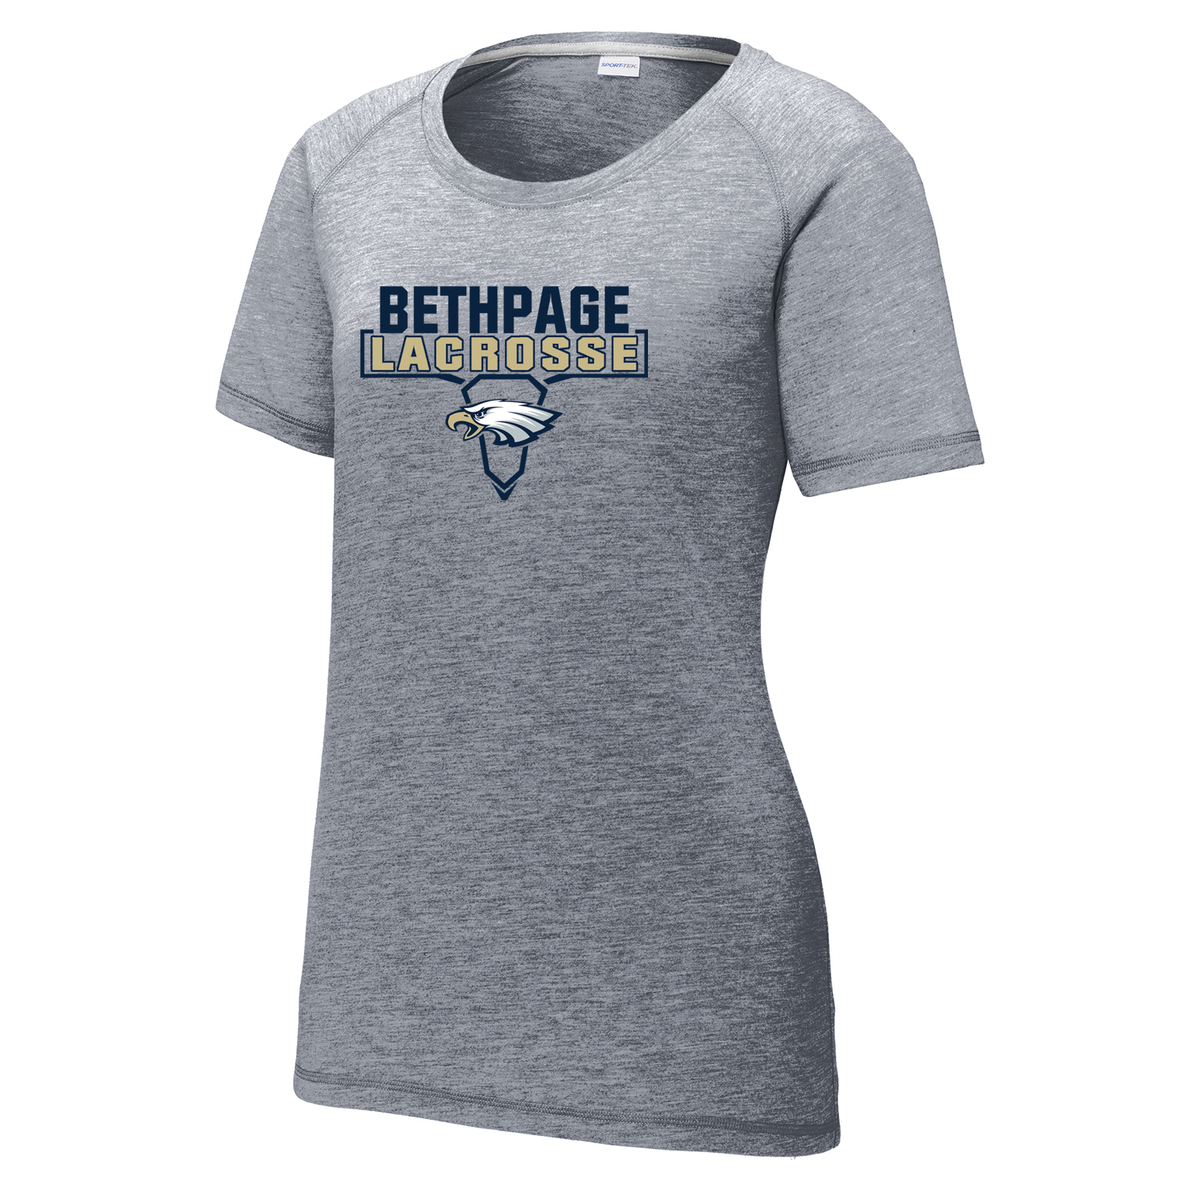 Bethpage HS Lacrosse Women's Raglan CottonTouch